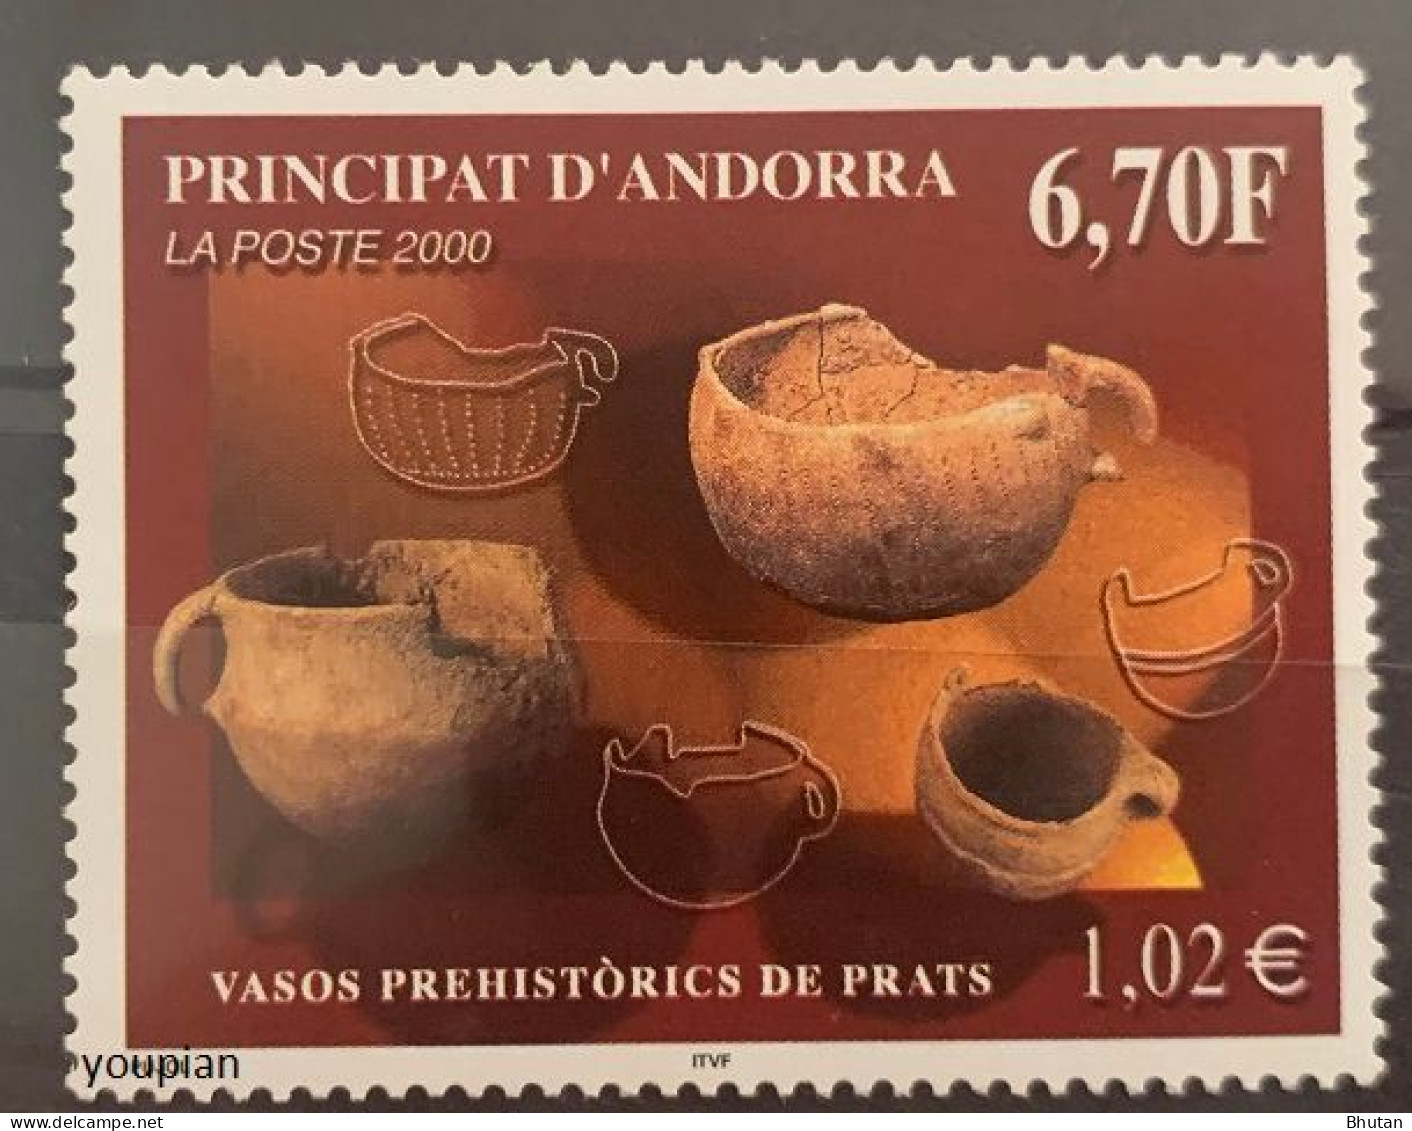 Andorra (French Post) 2000, Pottery, MNH Single Stamp - Ongebruikt